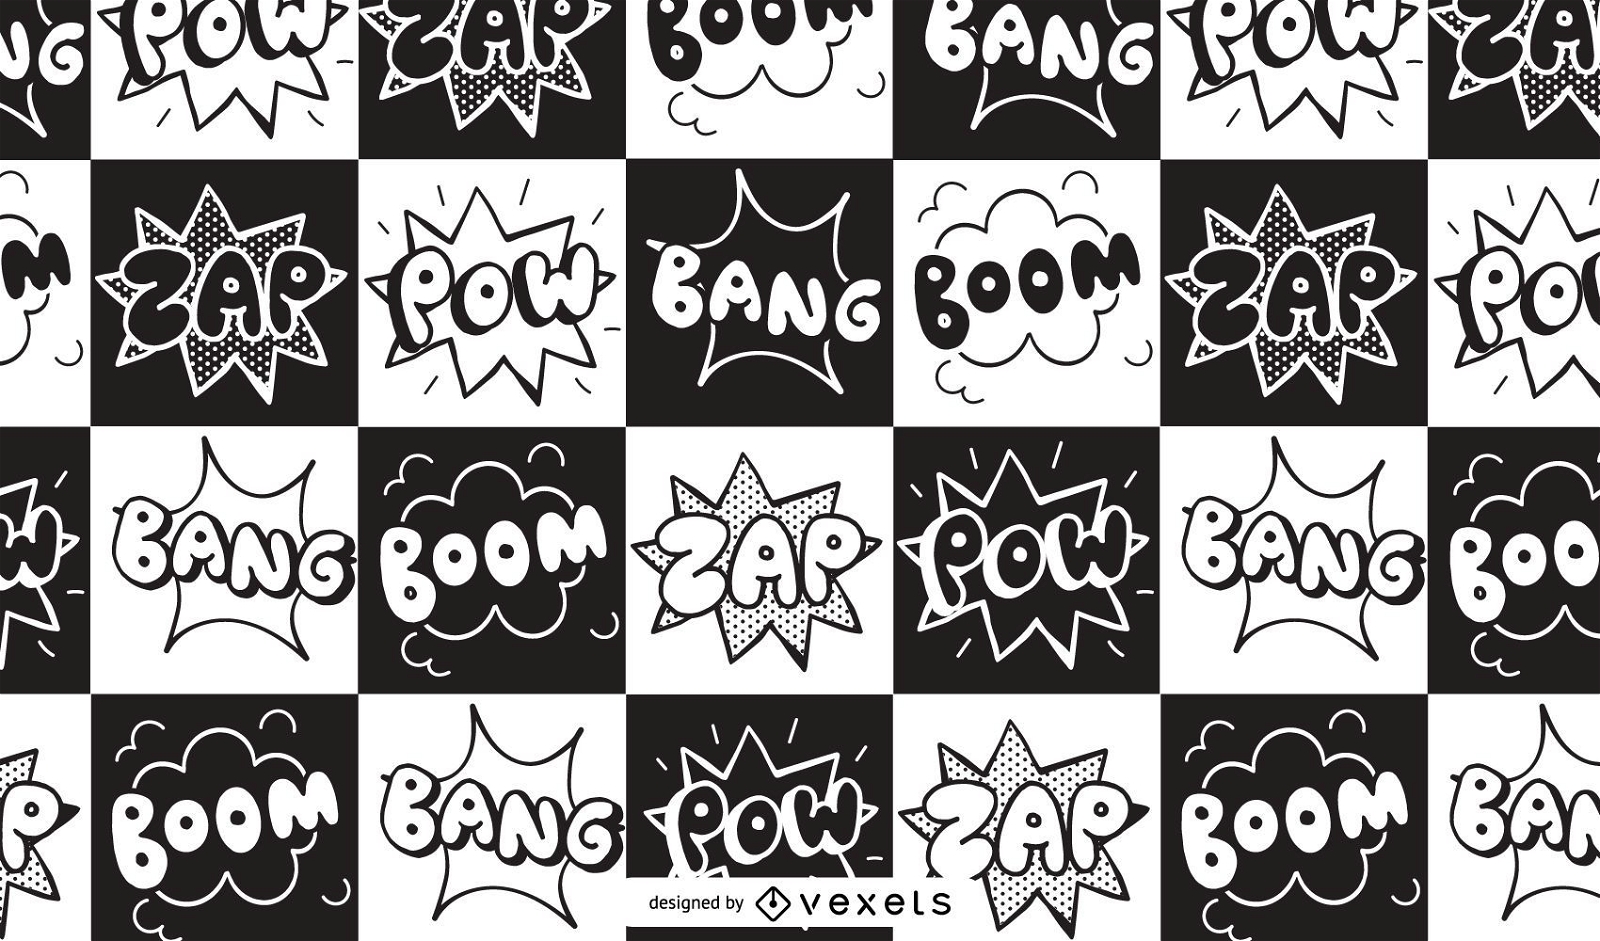 bang pow boom wallpaper